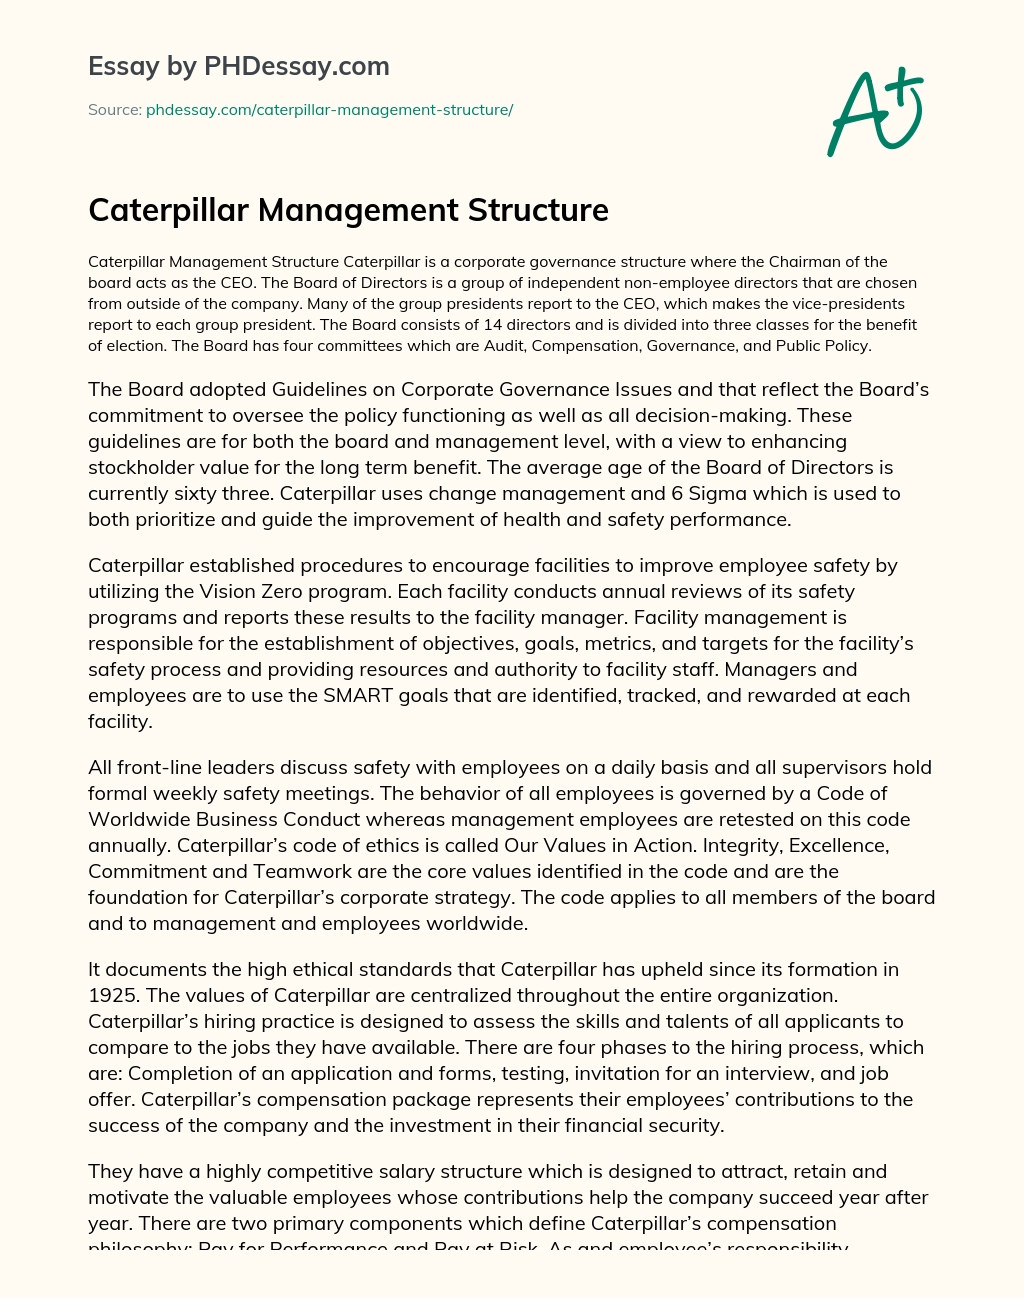 Caterpillar Management Structure essay